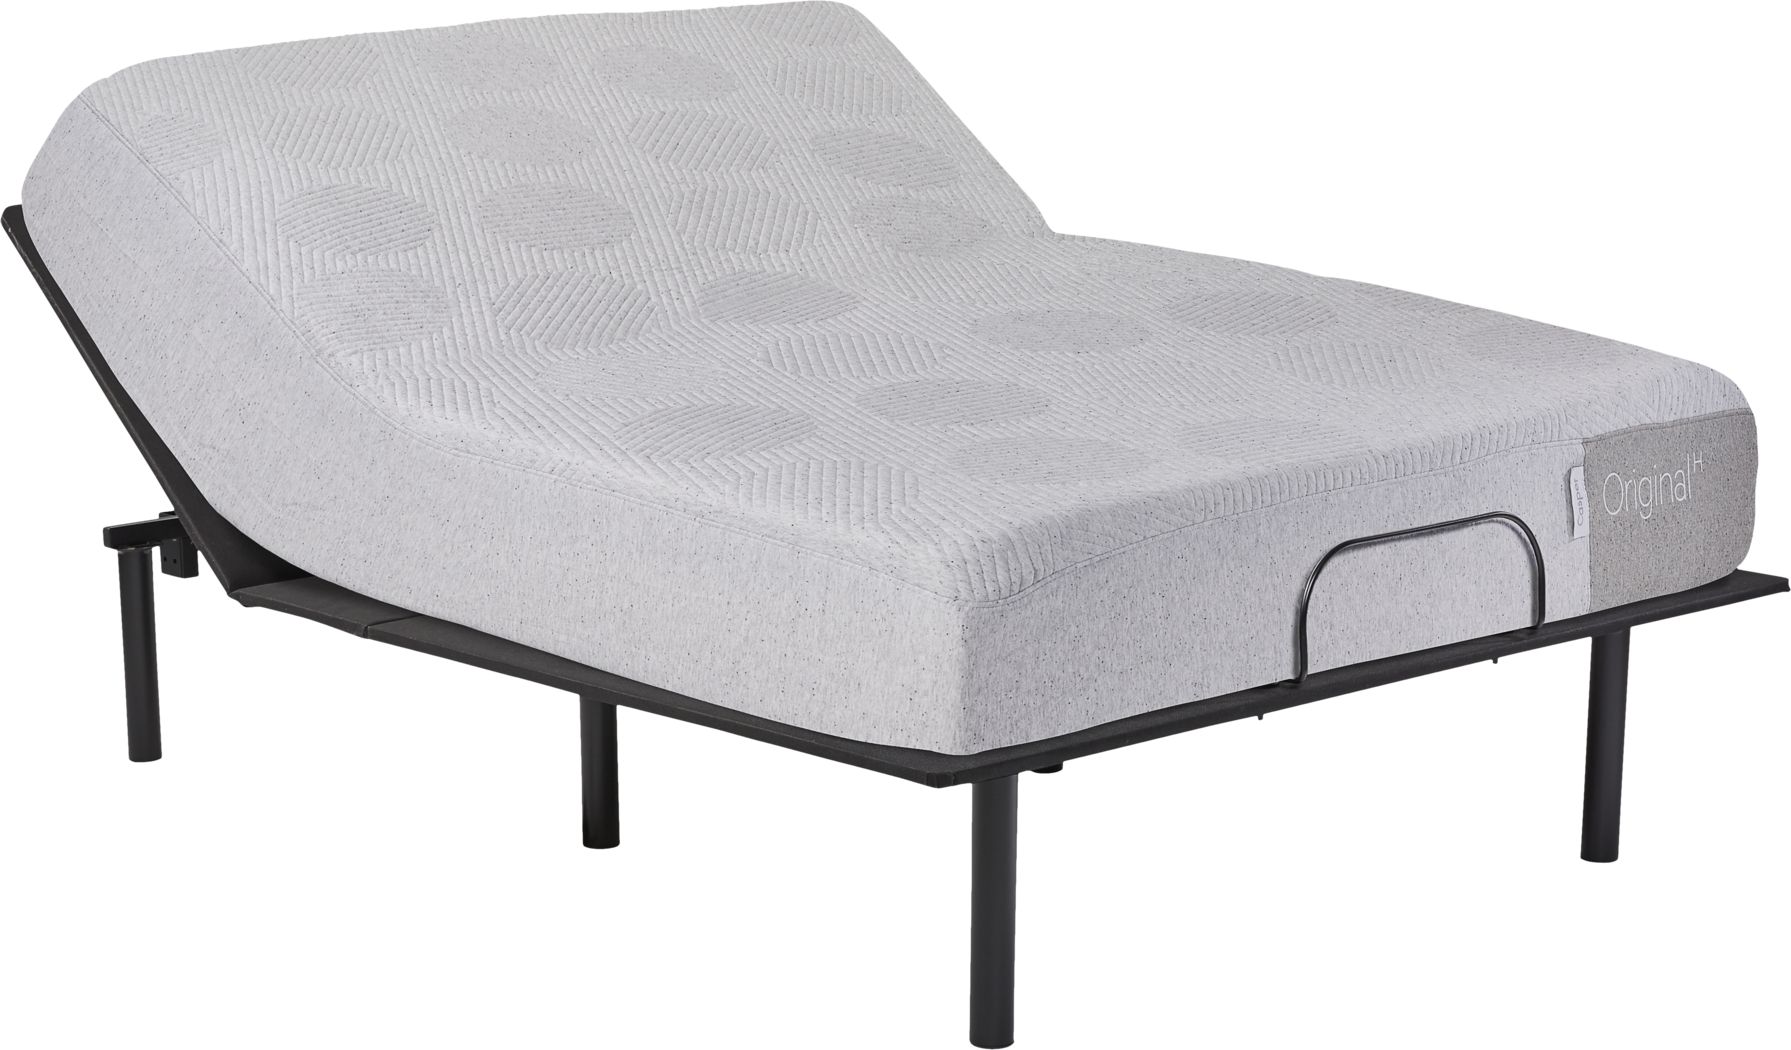 casper hybrid mattress king